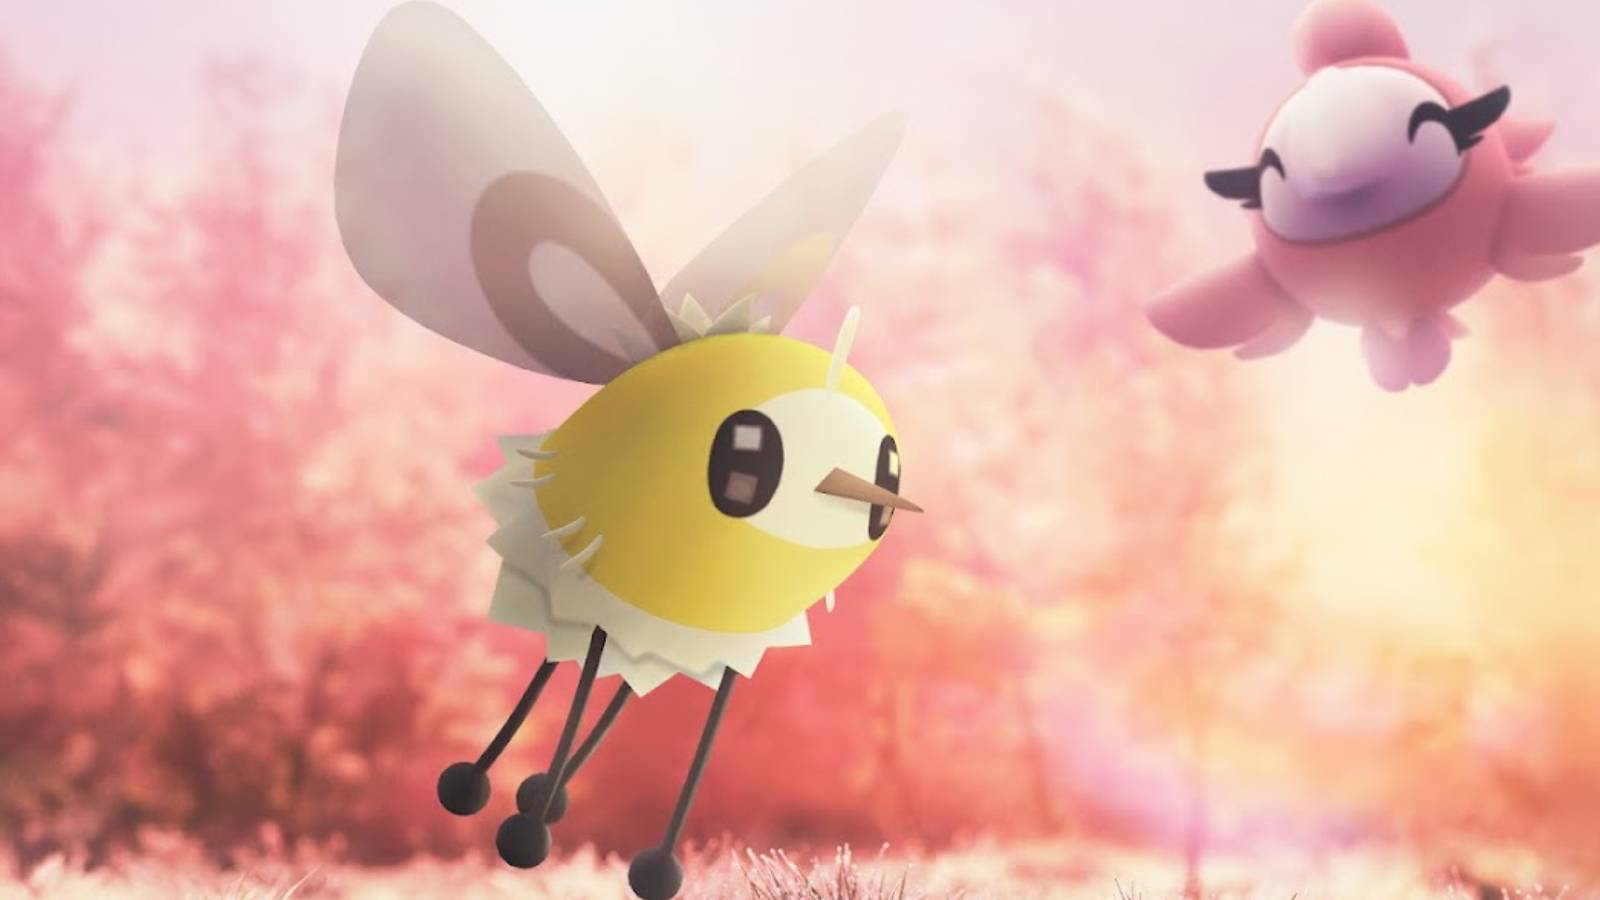 Key art for the Pokemon Go Dazzling Gleam event shows Cutiefly